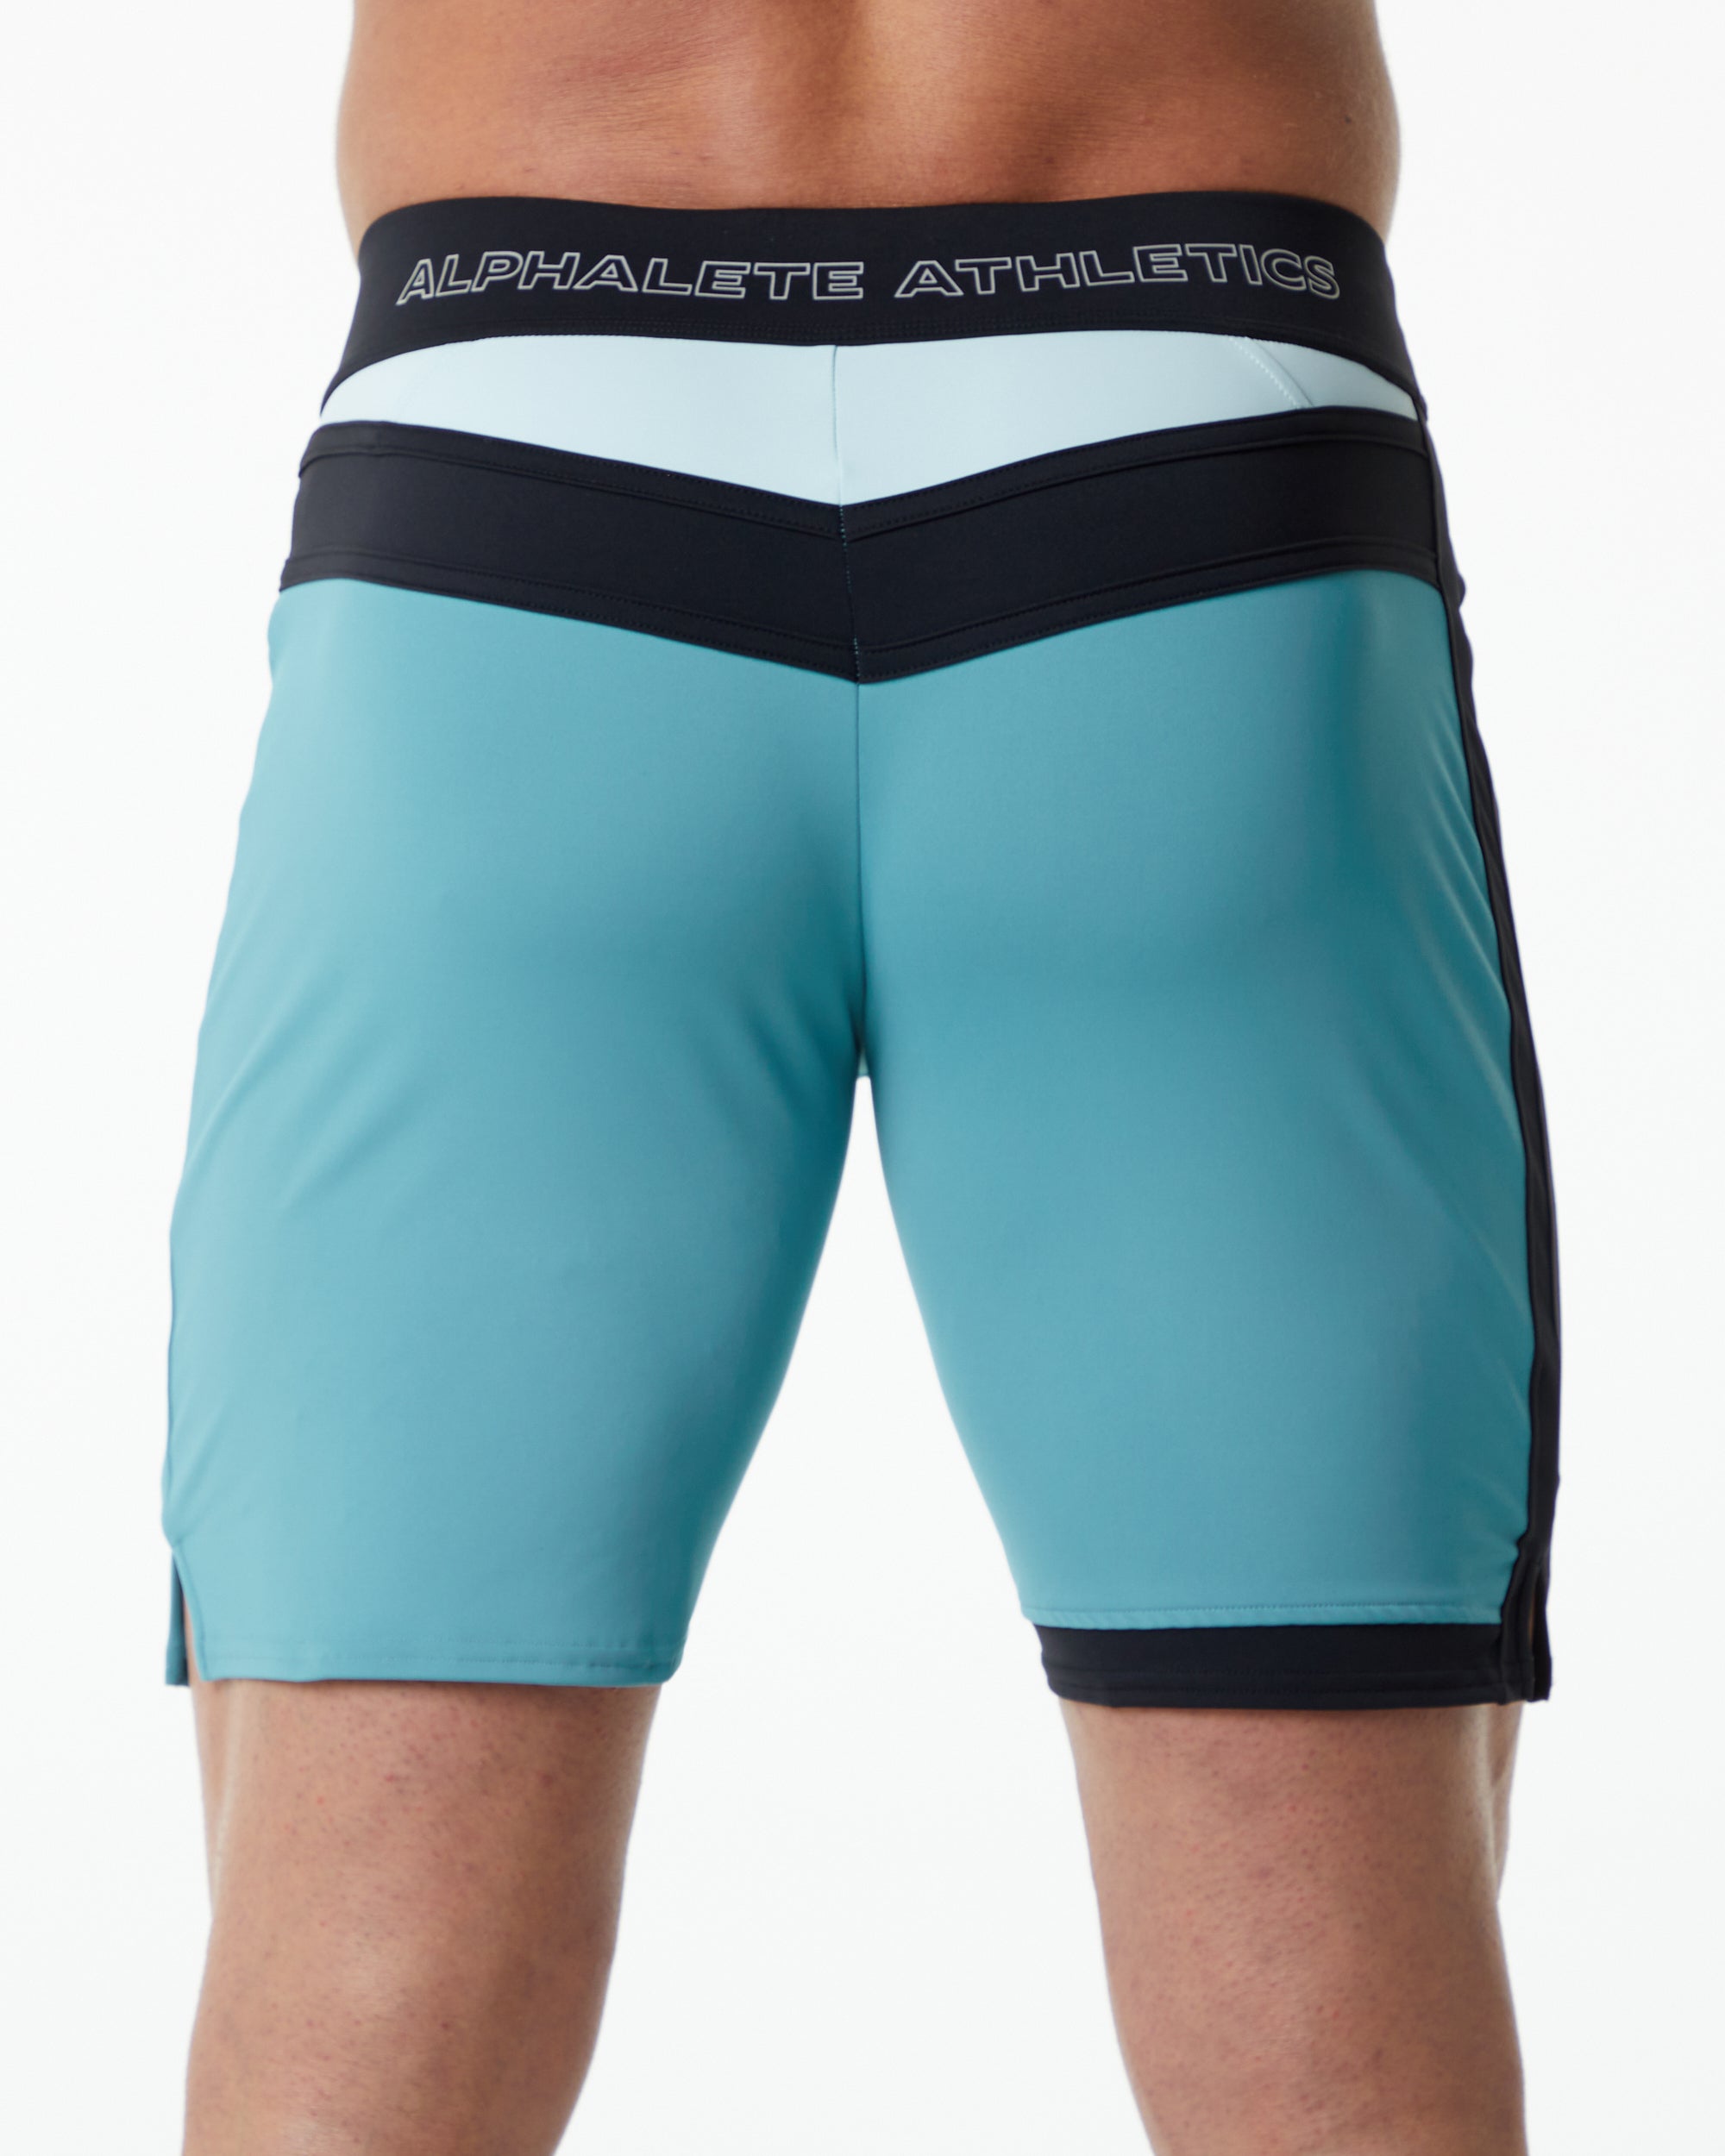 Men's Athletic Shorts – Alphalete Athletics